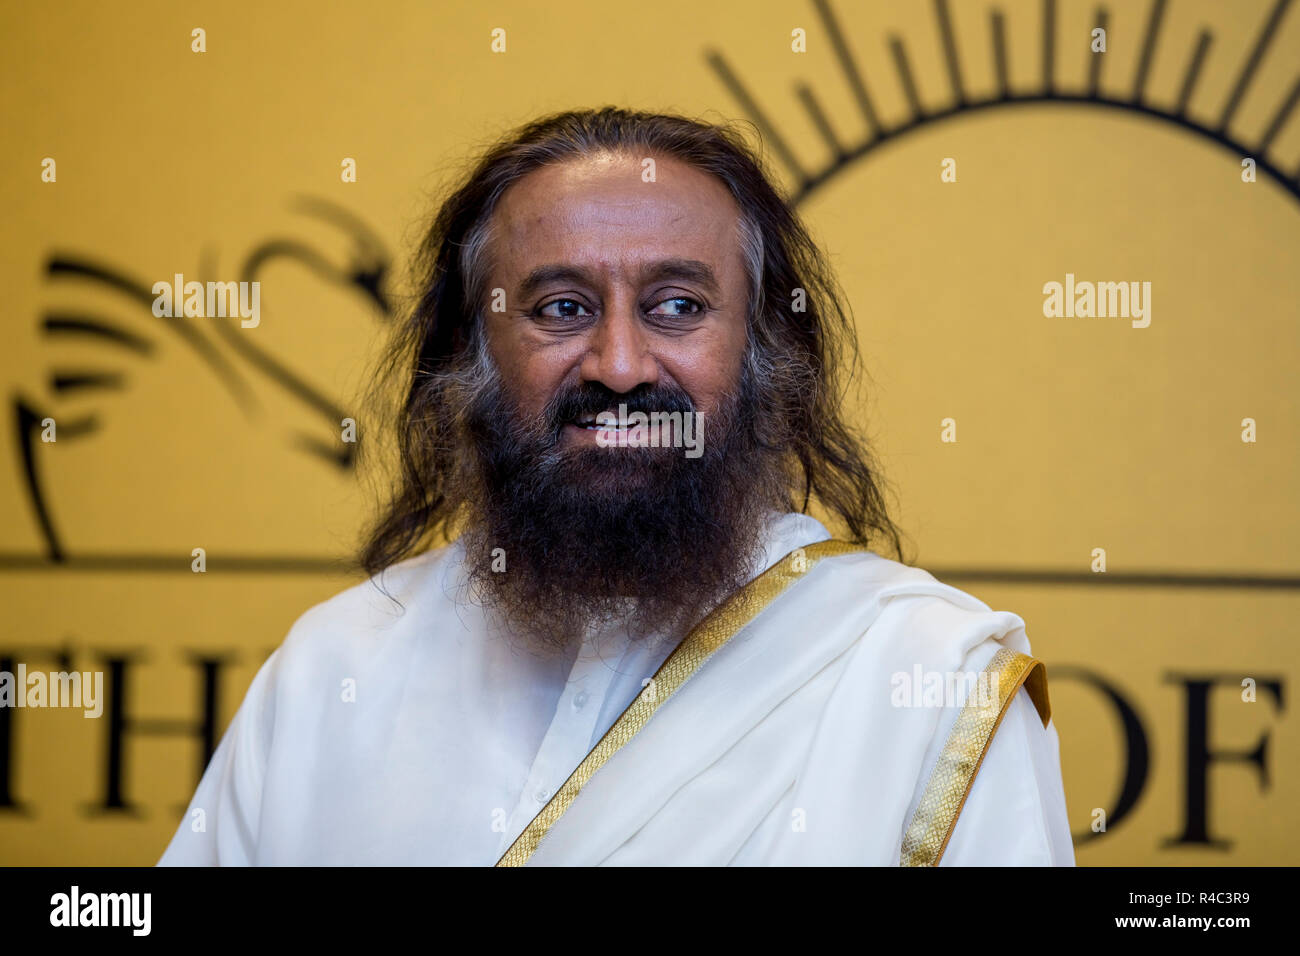 Dubai, Emirati Arabi Uniti - 17 novembre 2018: Il guru spirituale indiano Sri Sri Ravi Shankar in visita negli Emirati Arabi Uniti per condurre una lezione di meditazione Foto Stock